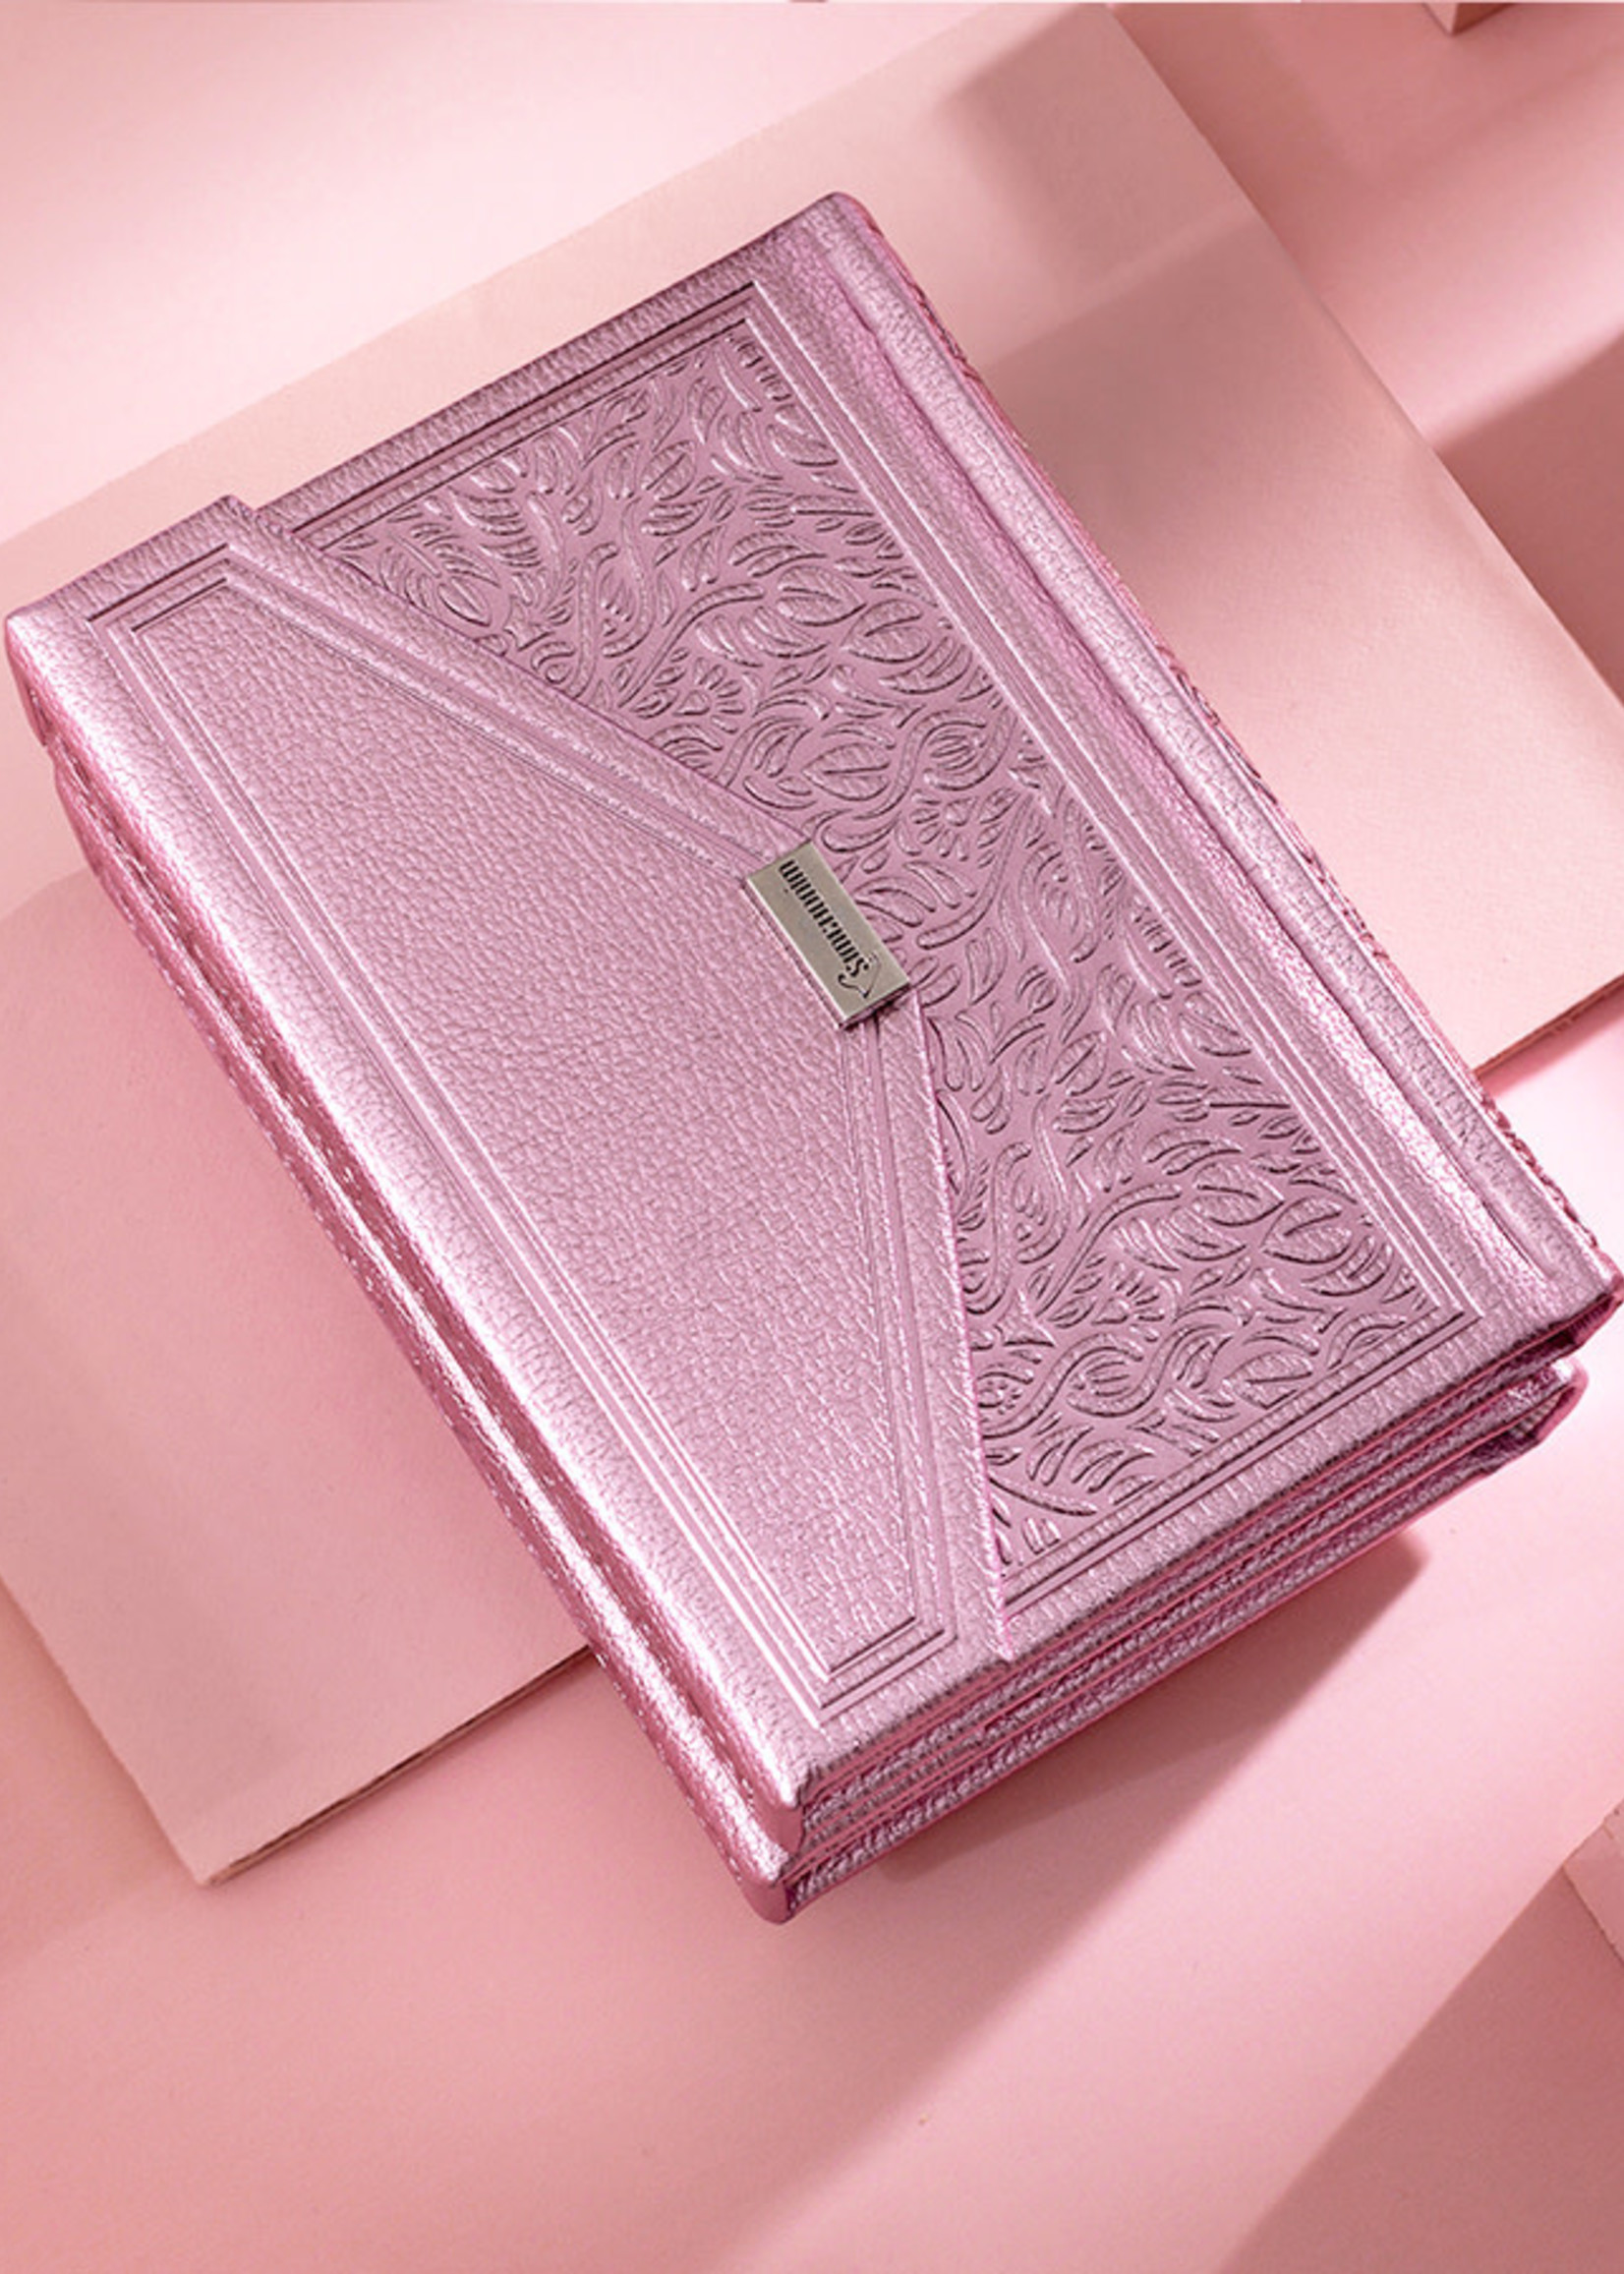 Simchonim /  שמחונים Siddur Envelope Style - Metallic  Pink Sefard/  סידור שמחונים